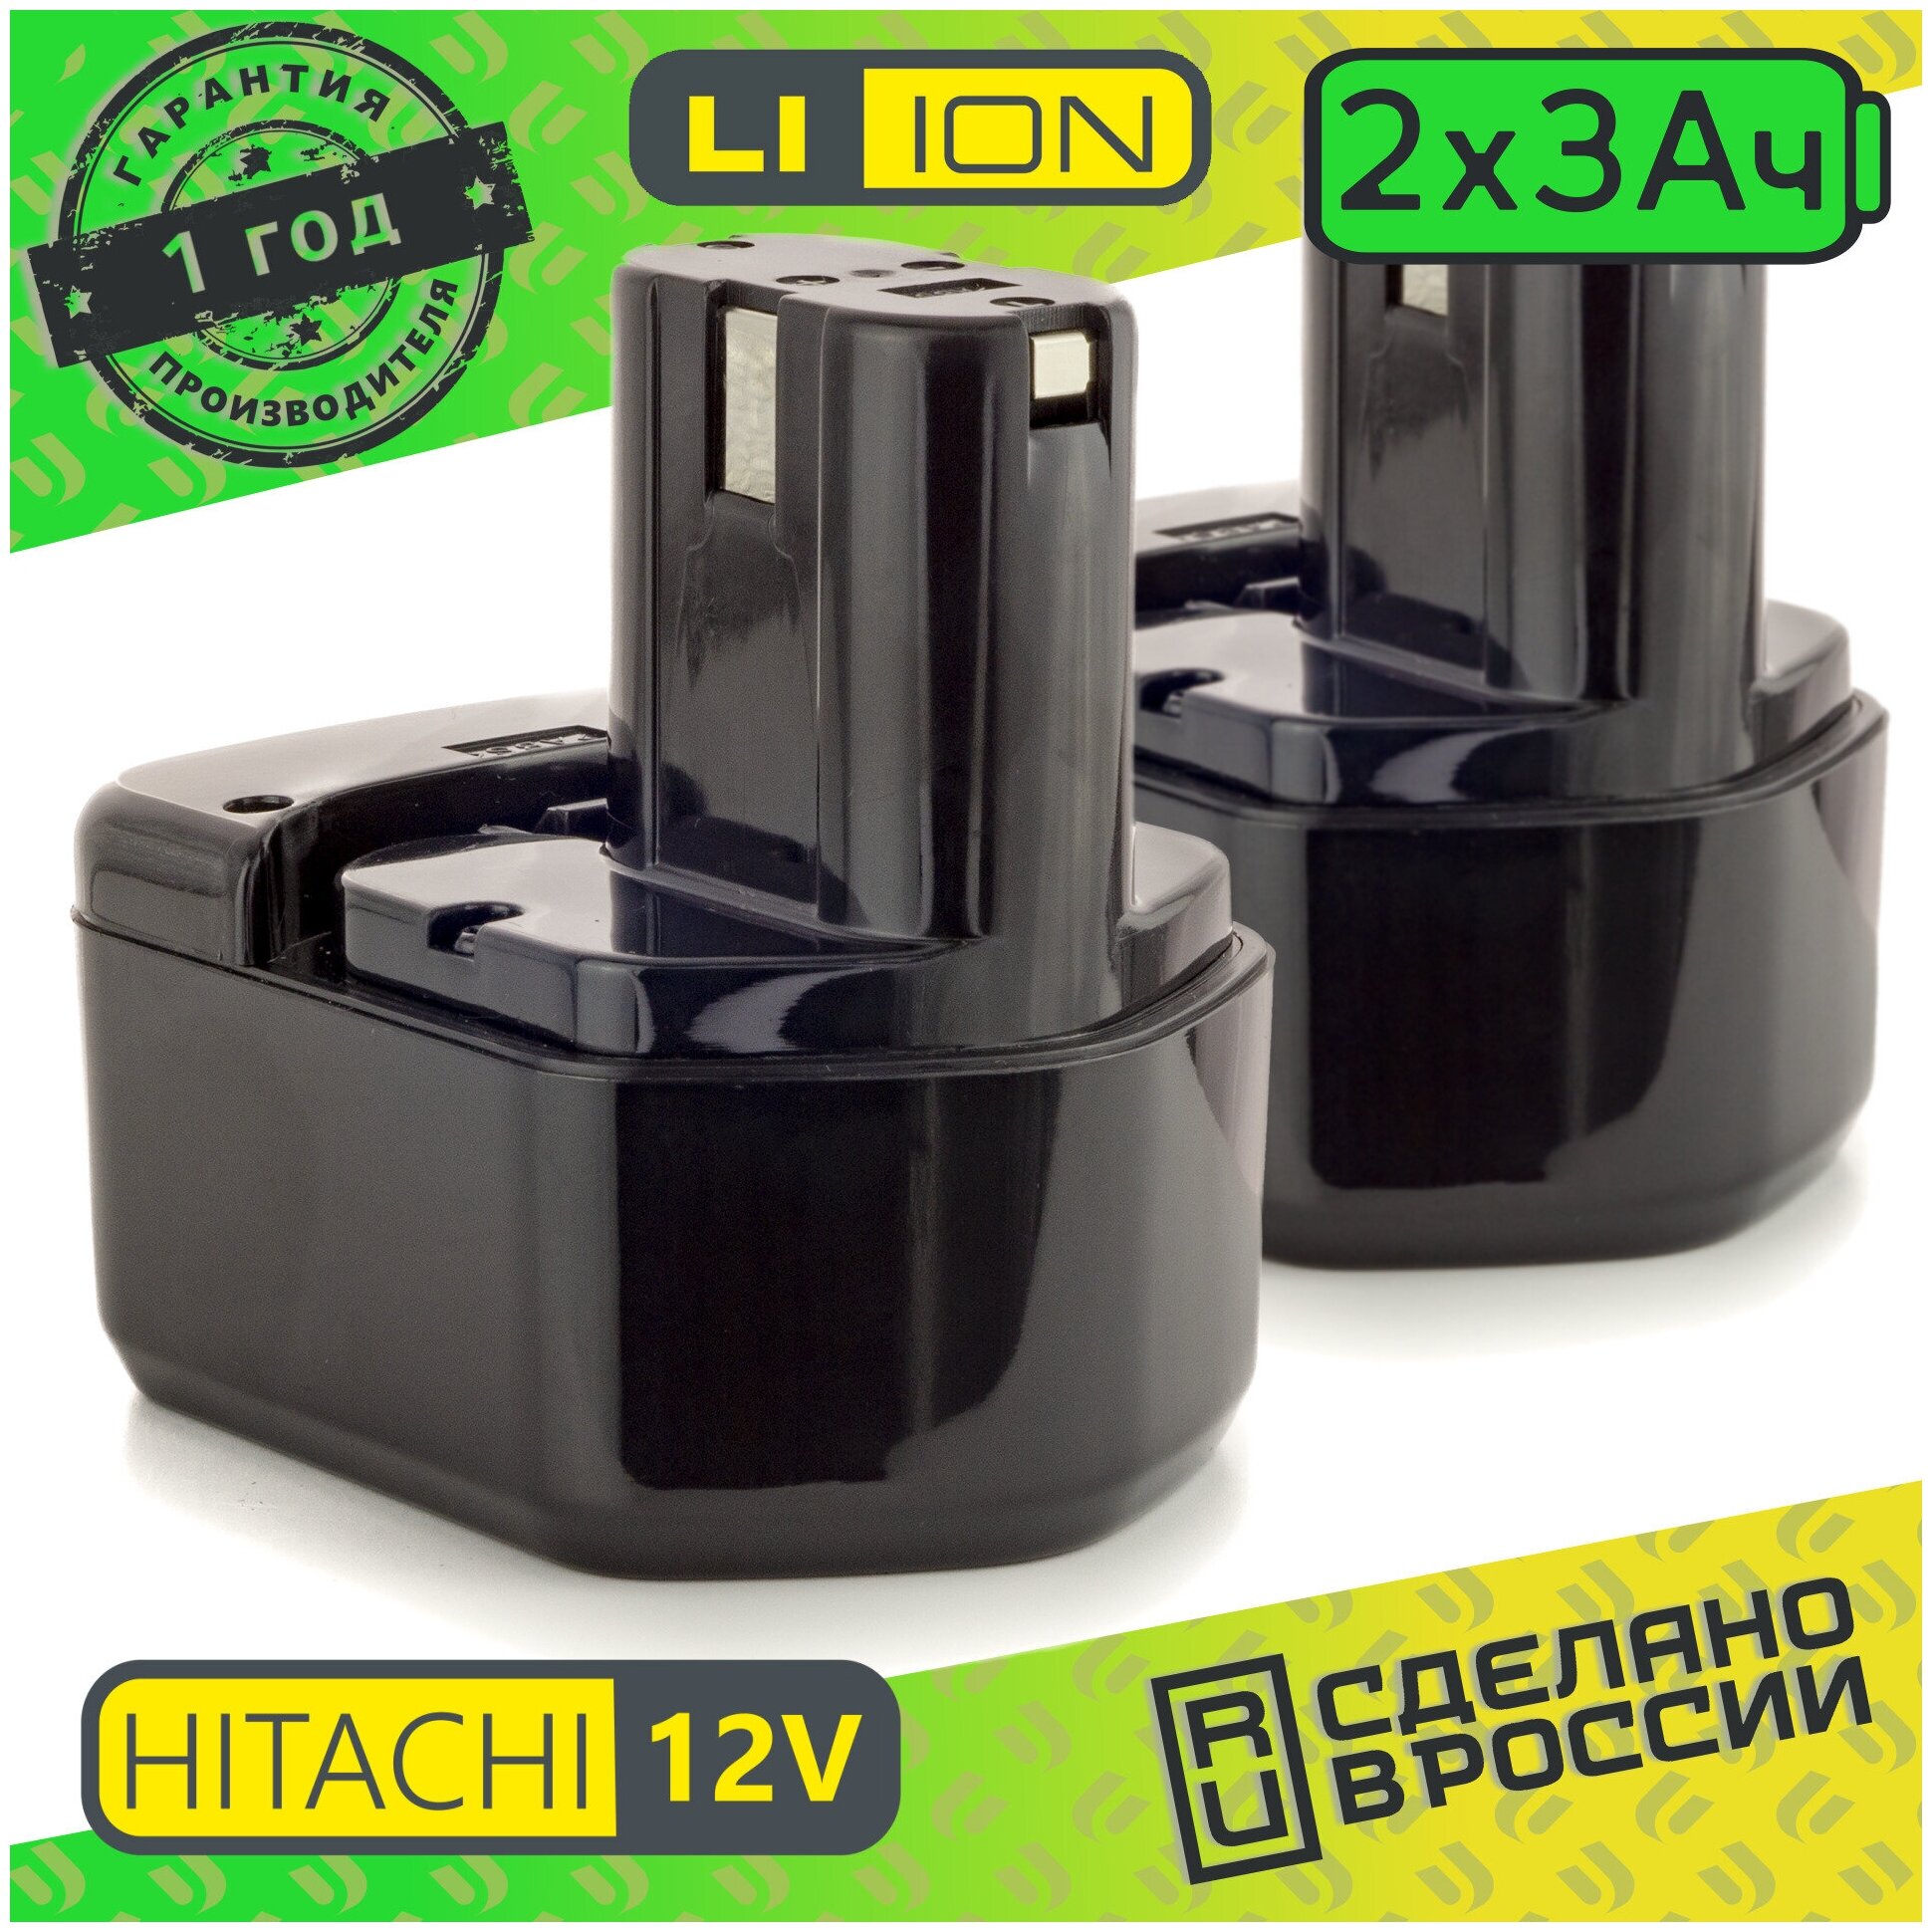 Аккумулятор для шуруповерта Hitachi EB1215 Li-ion 12V 3.0 ah (комплект из 2х шт.)